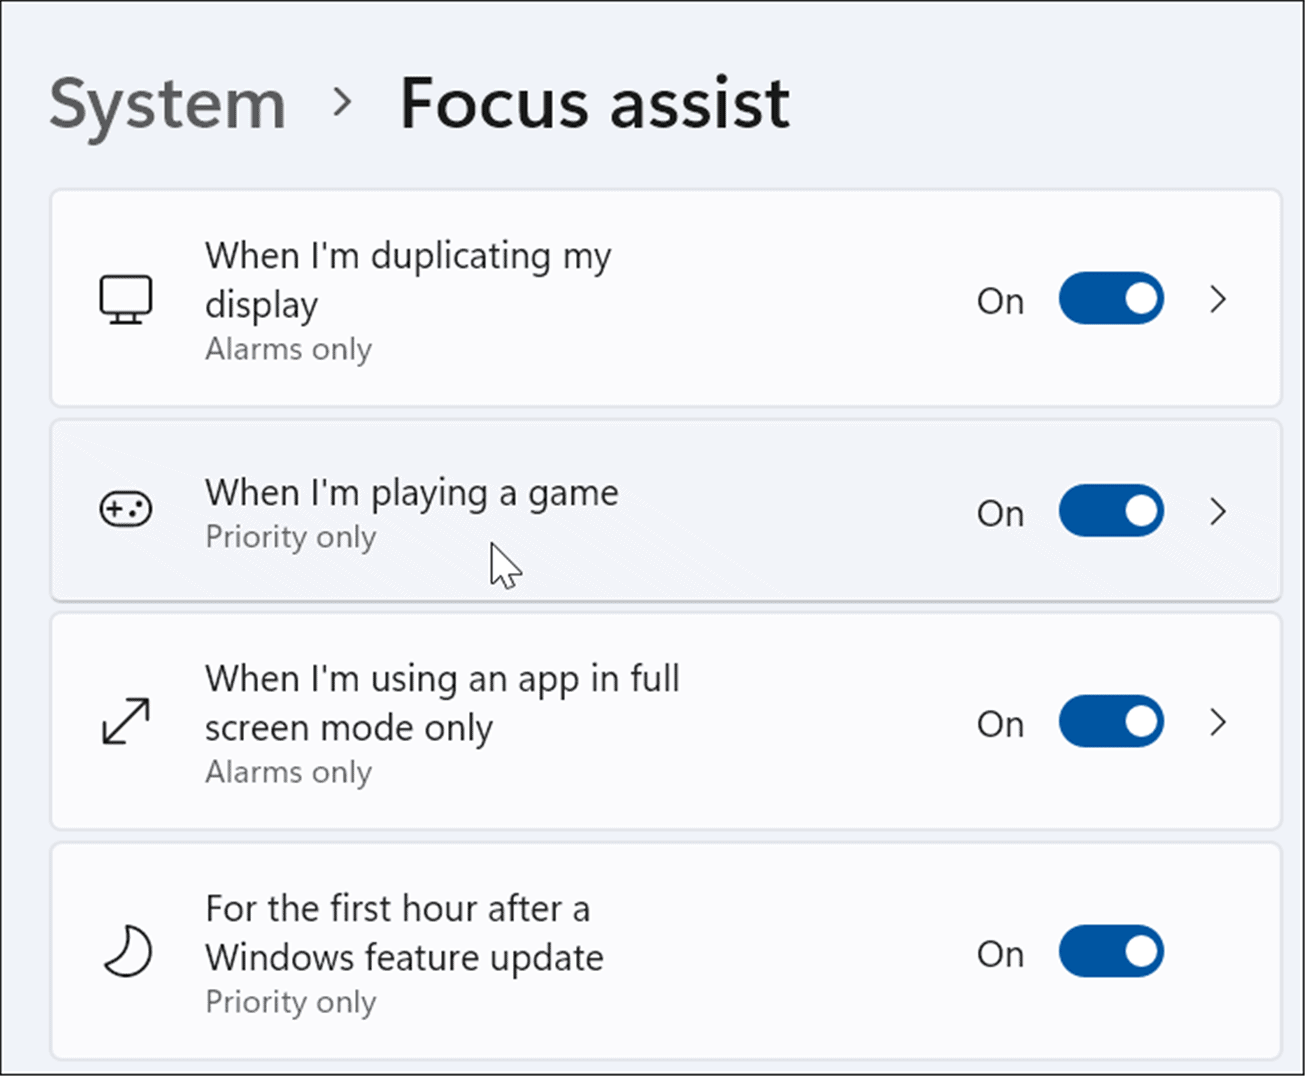 10-focus-assist-times